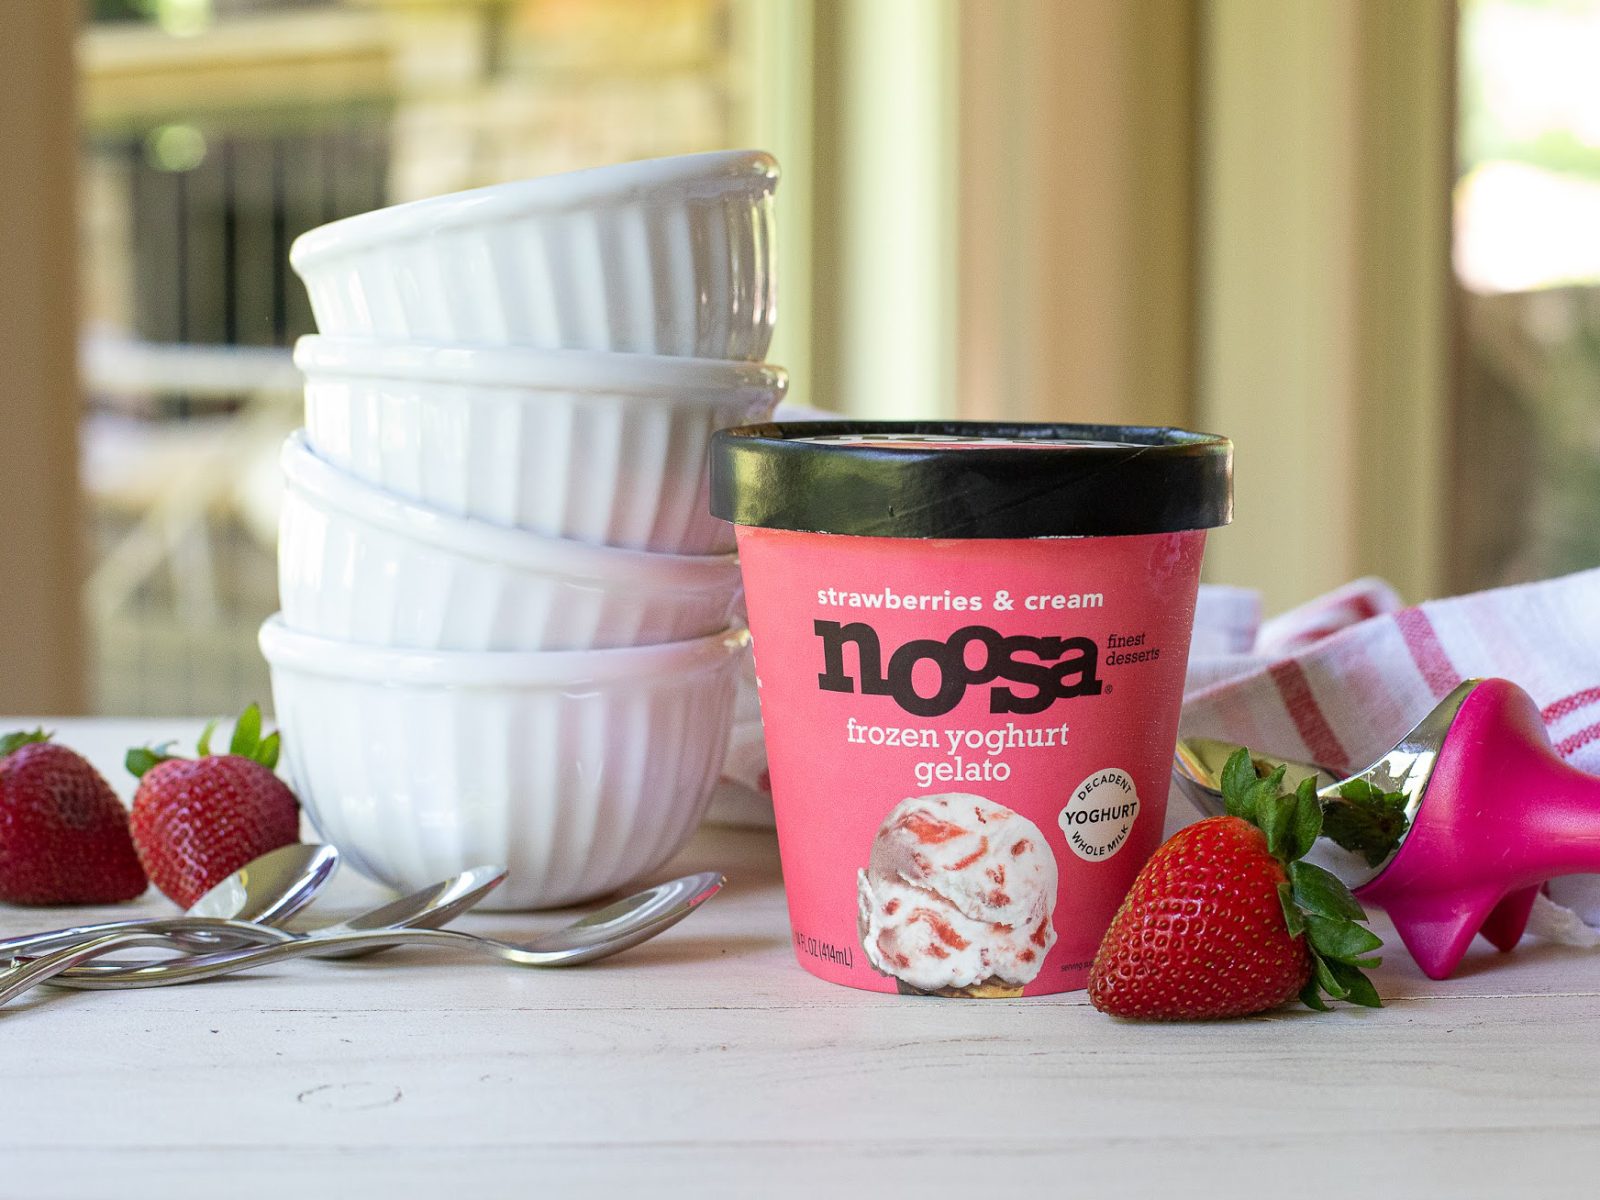 New Noosa Frozen Yoghurt Gelato Printable For Current BOGO Sale – FREE At Publix